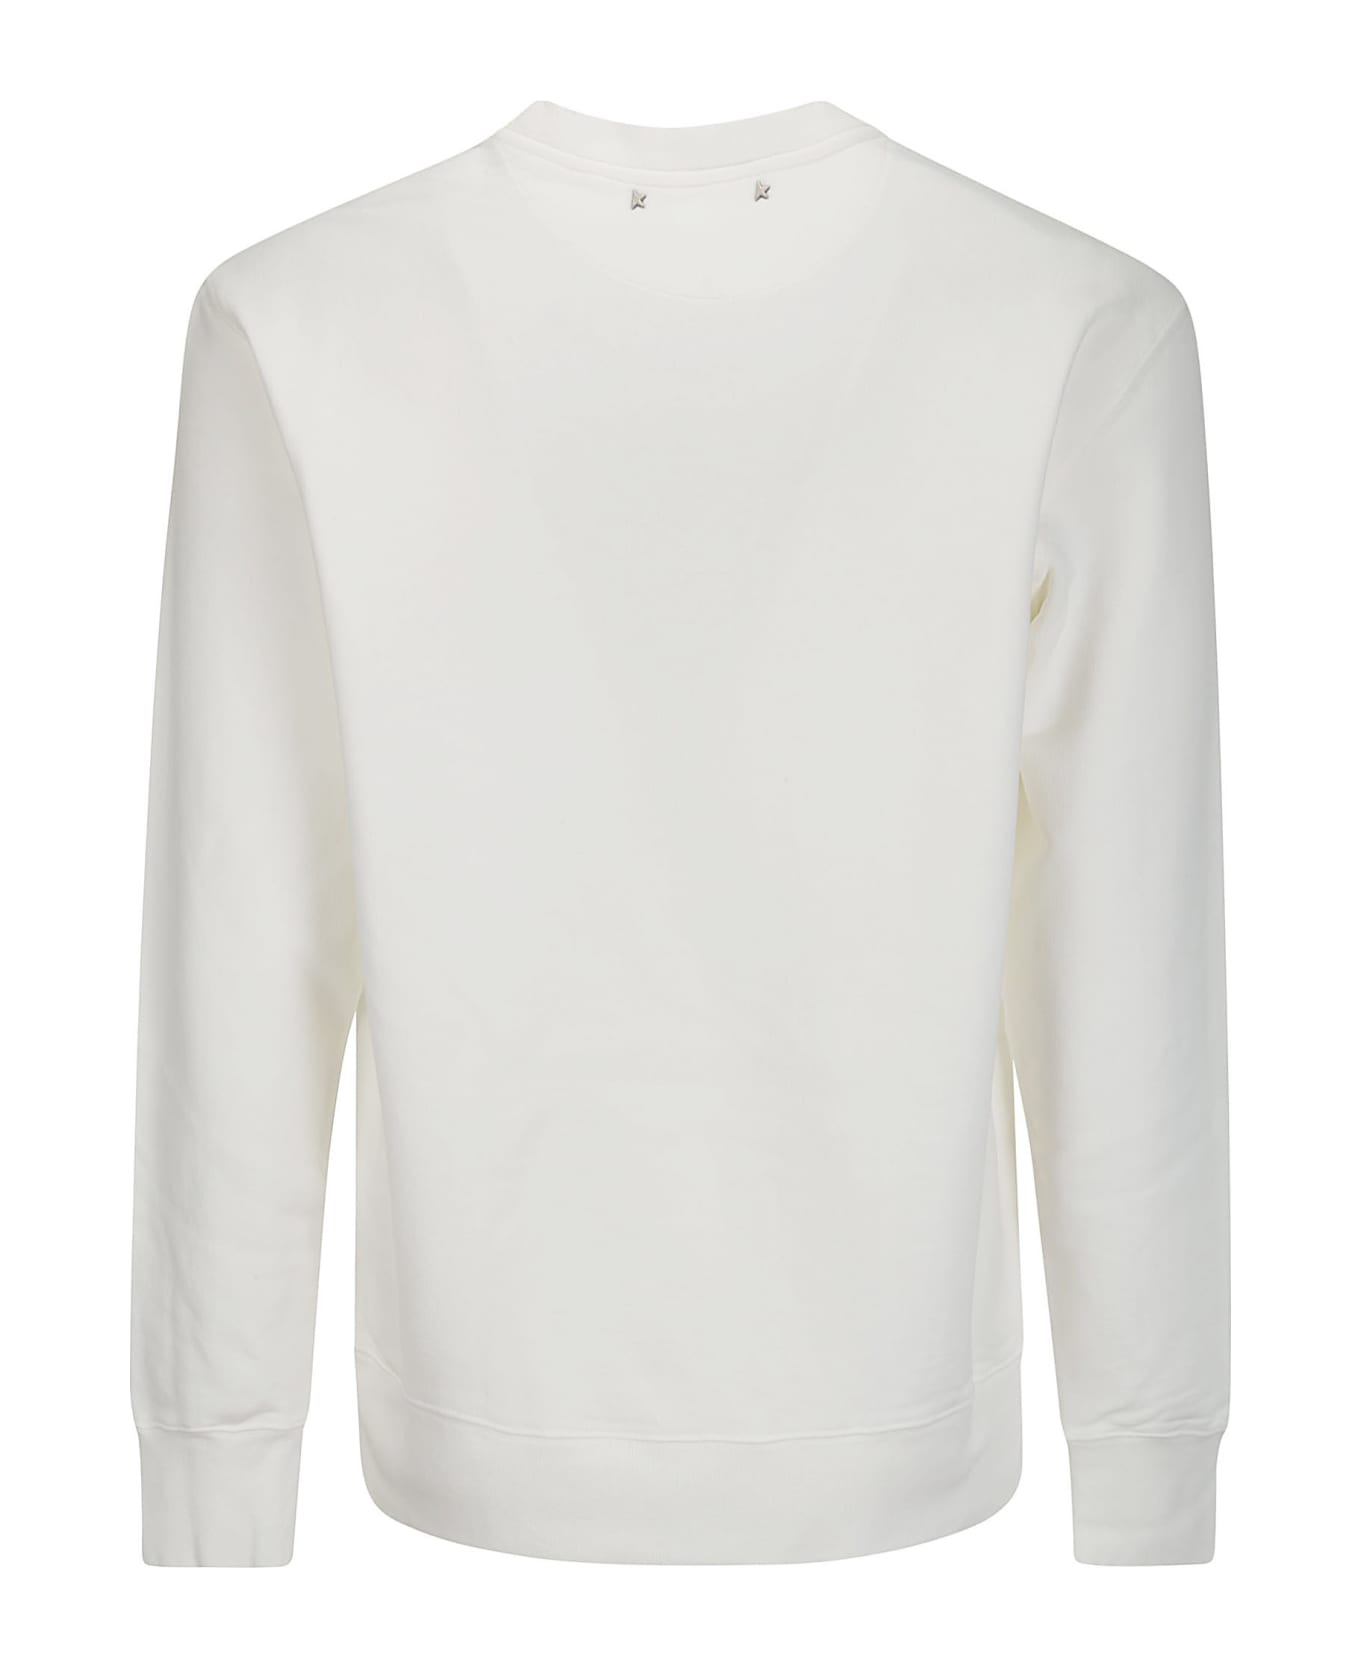 Golden Goose Cotton Sweatshirt - VINTAGE WHITE